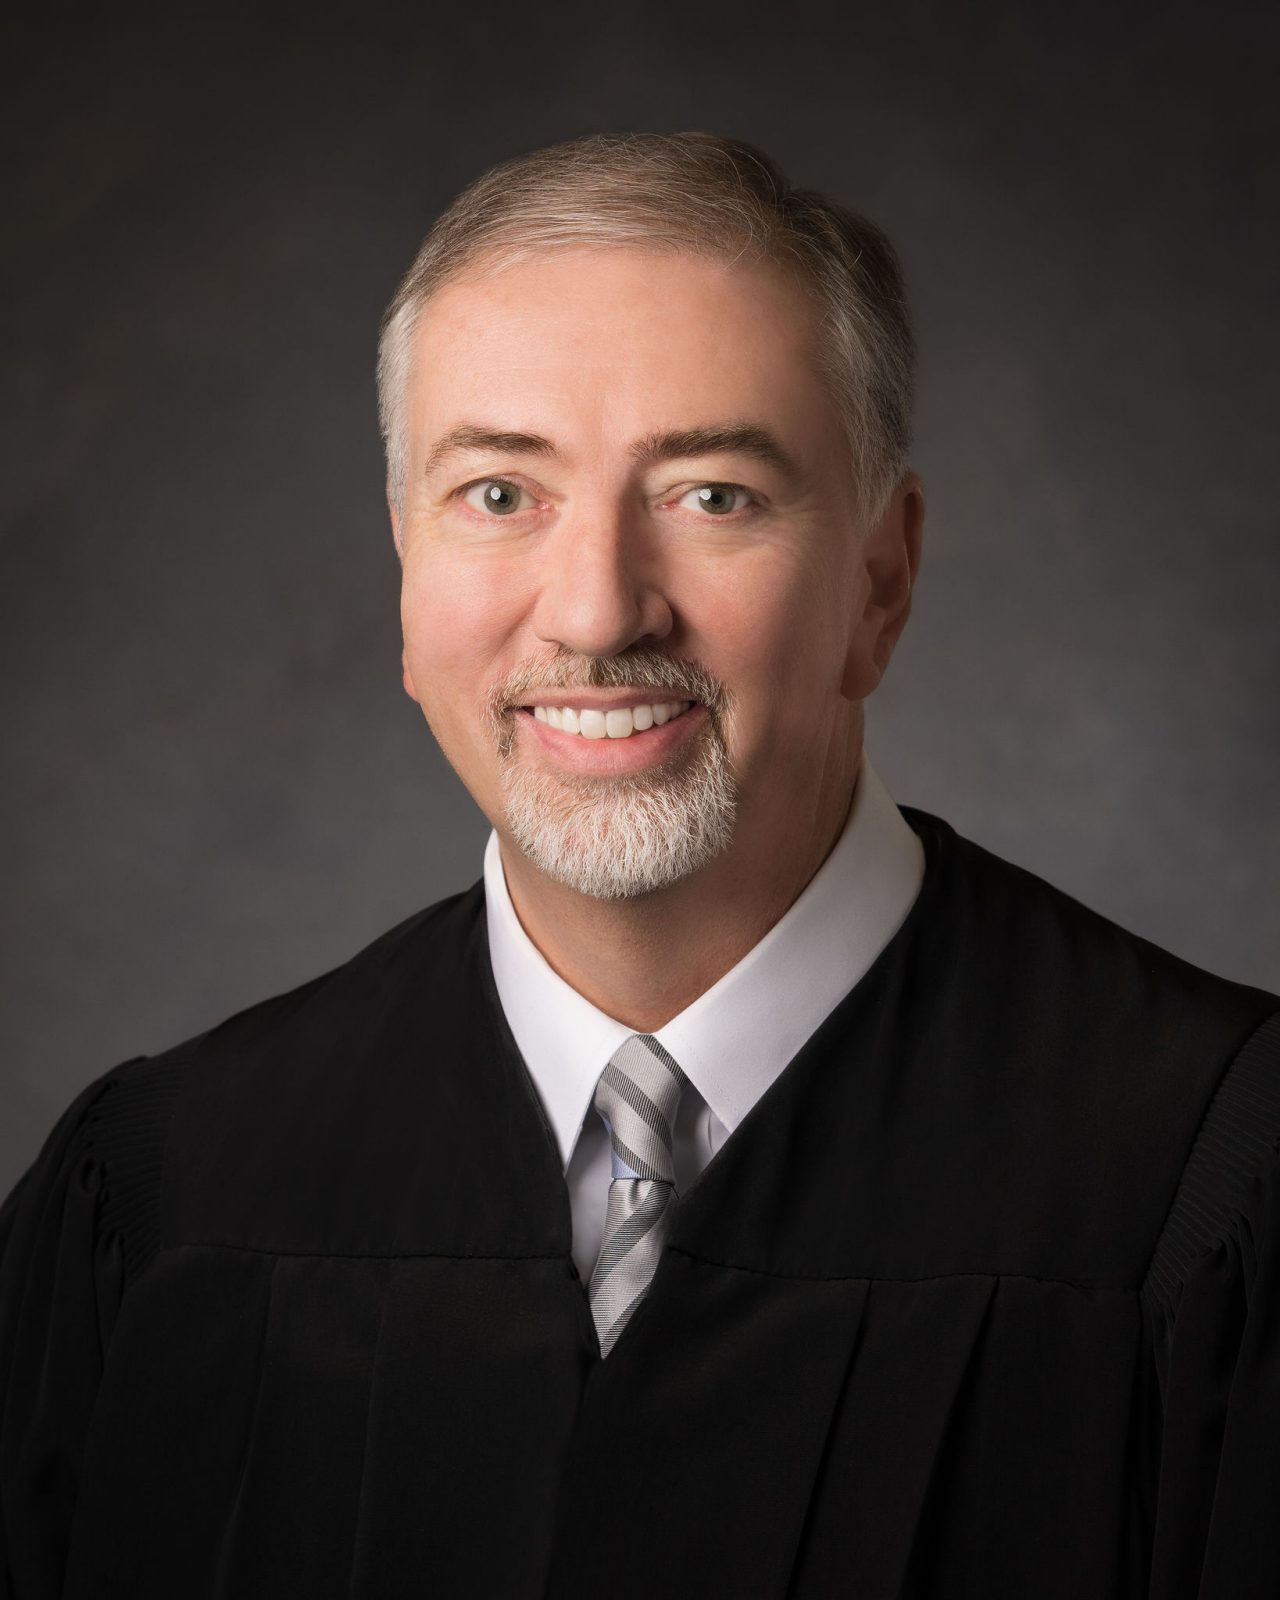 JUDGE ERIC A. LUDLOW